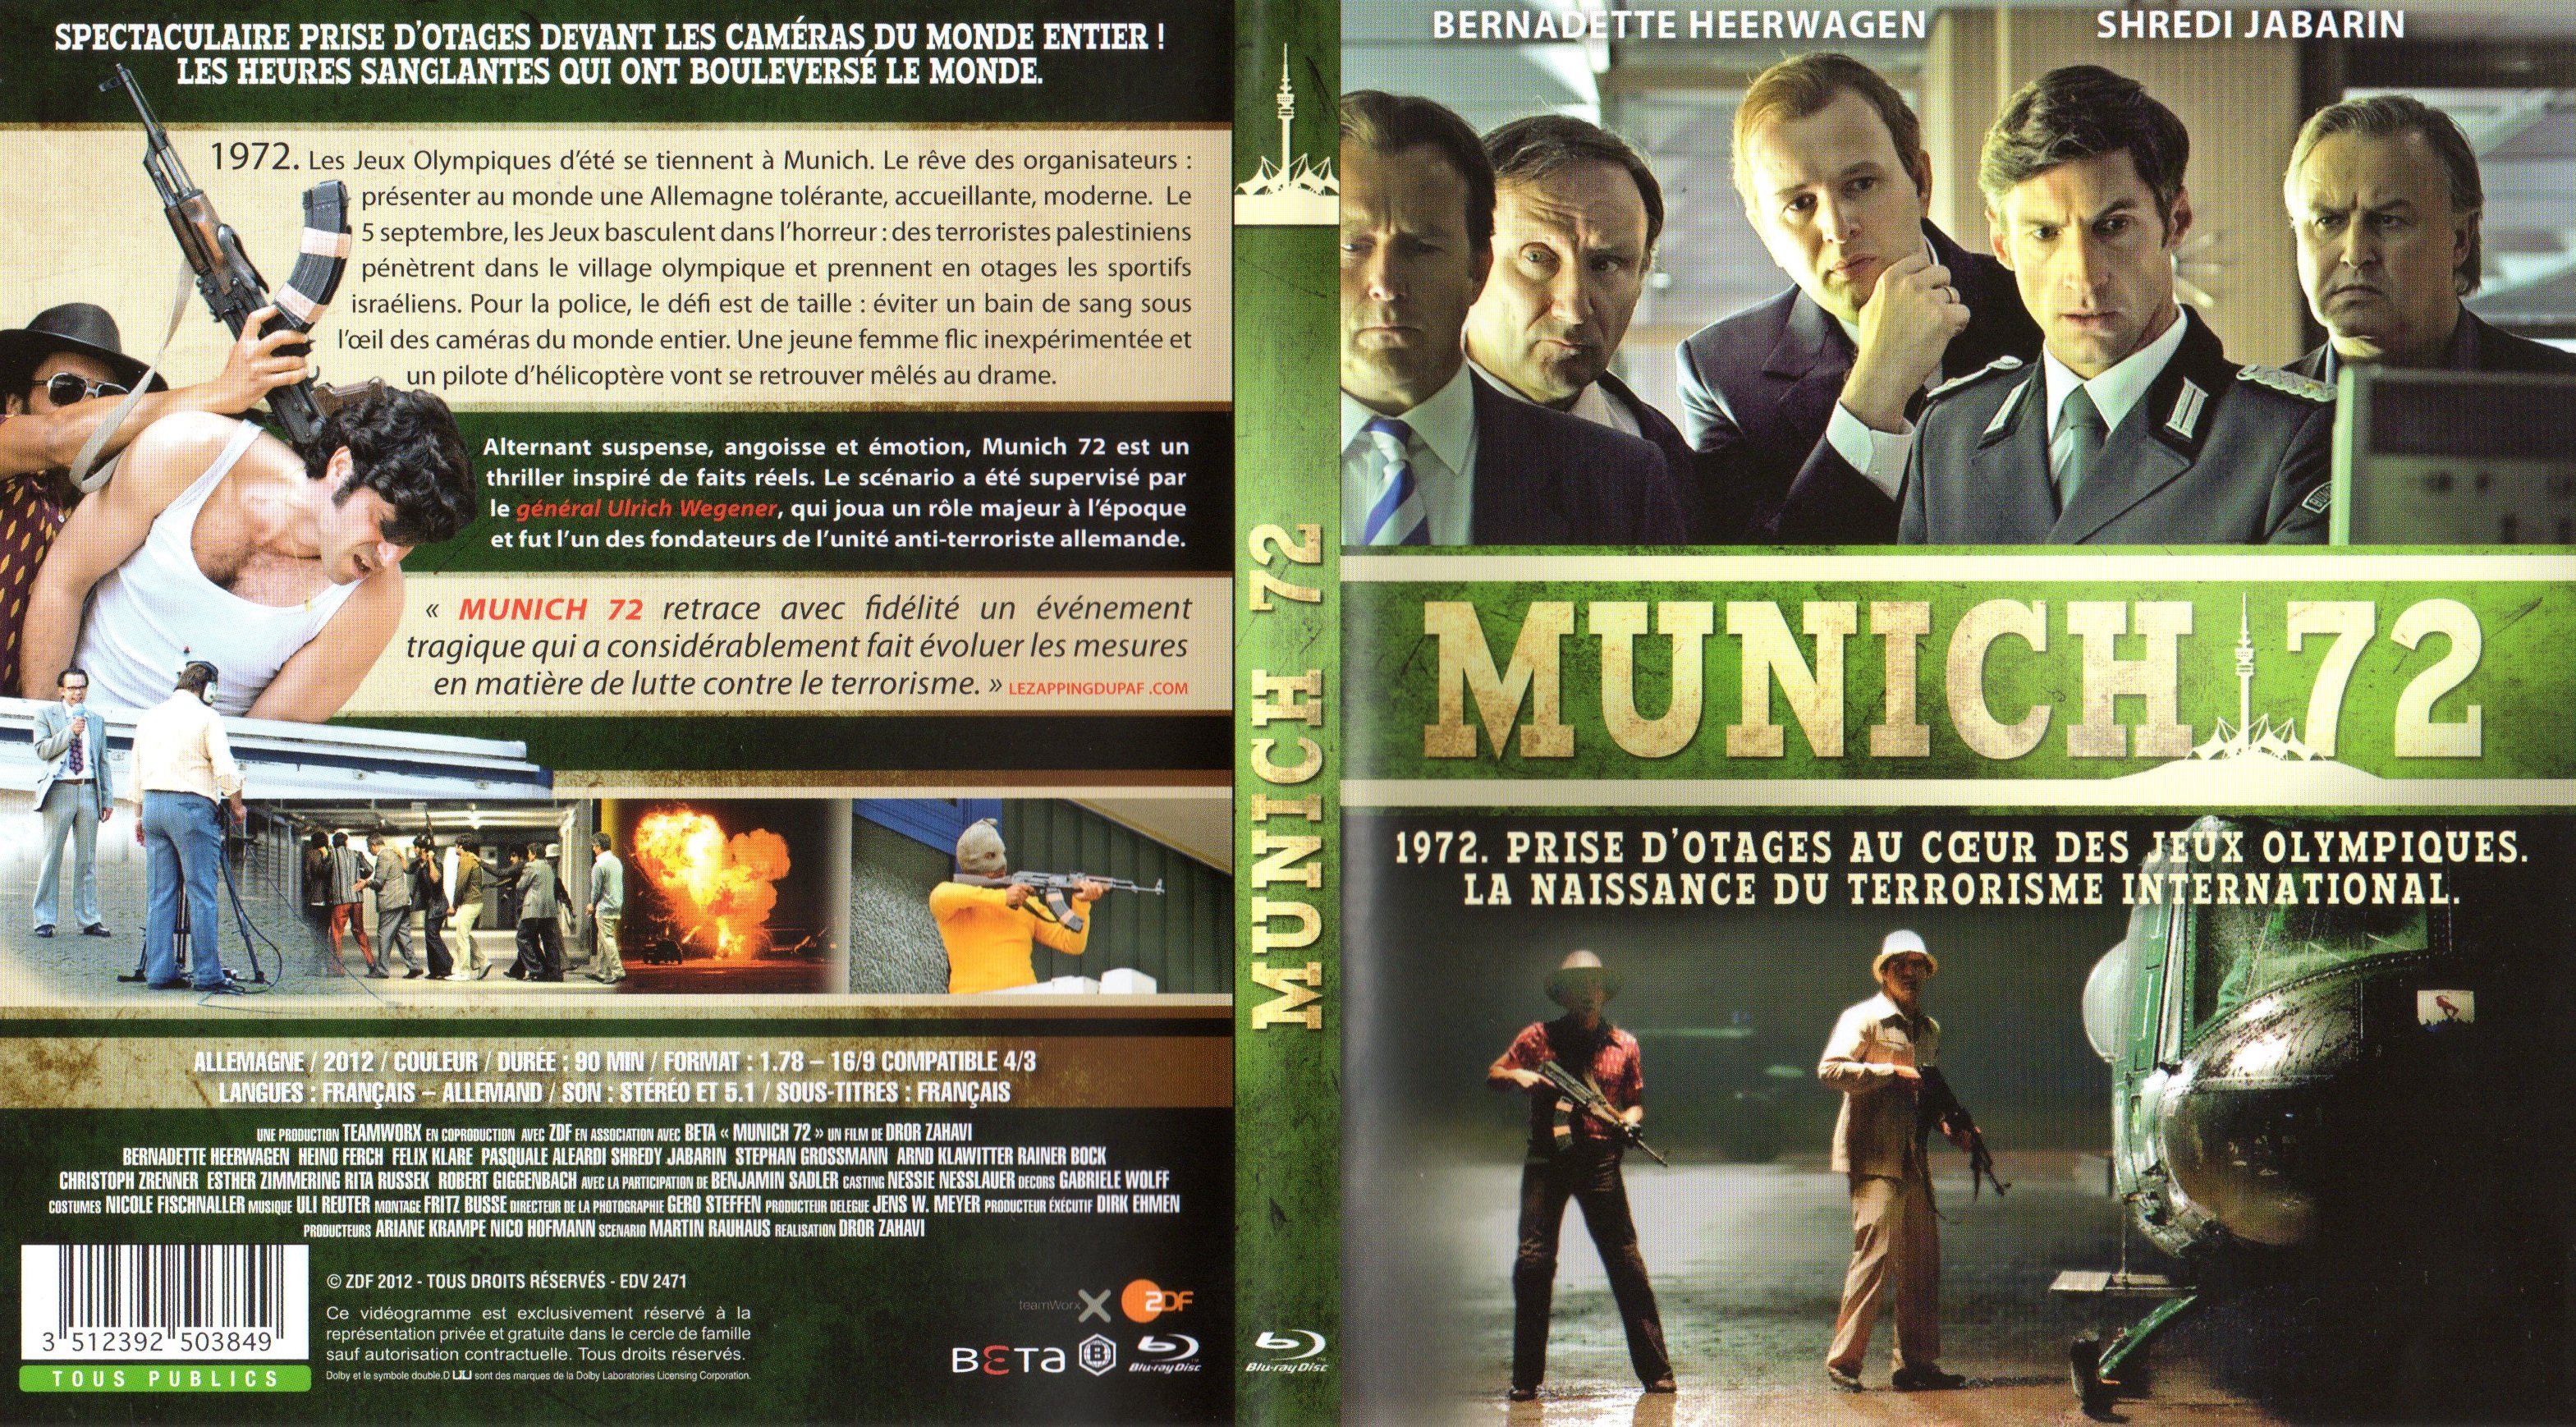 Jaquette DVD Munich 72 (BLU-RAY)